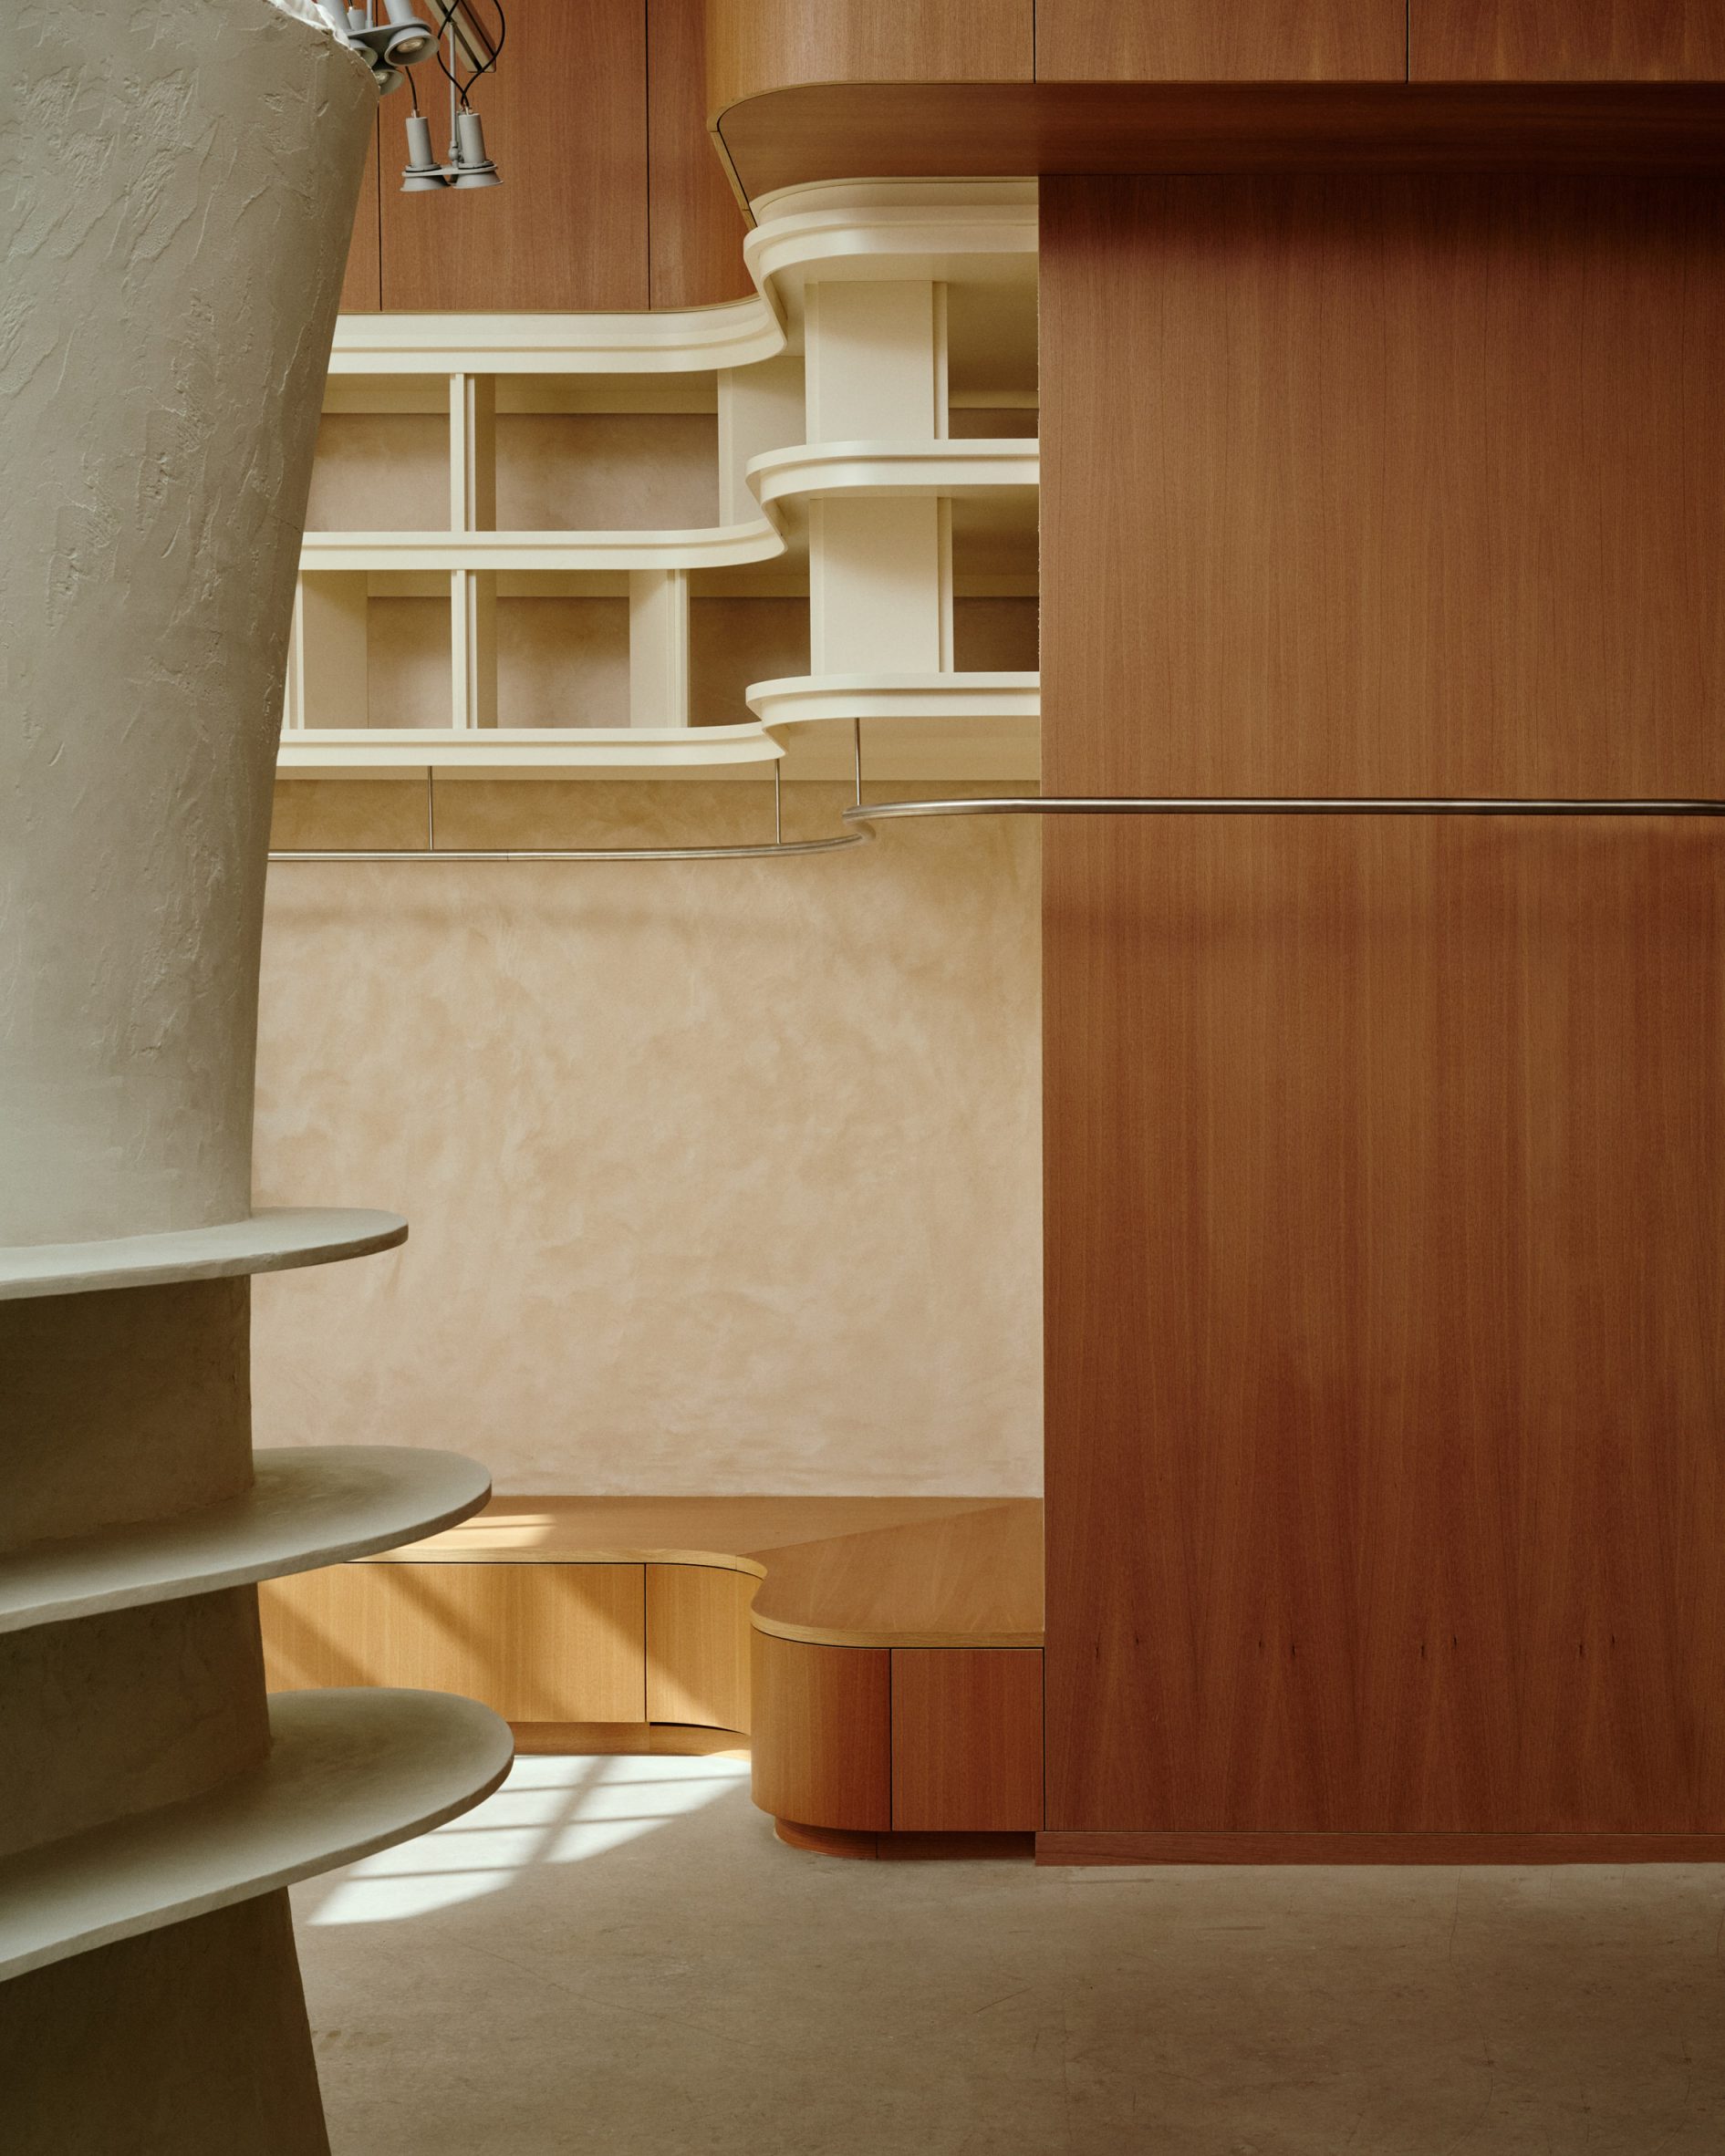 Copenhagen store features minimalist interiors by Snøhetta